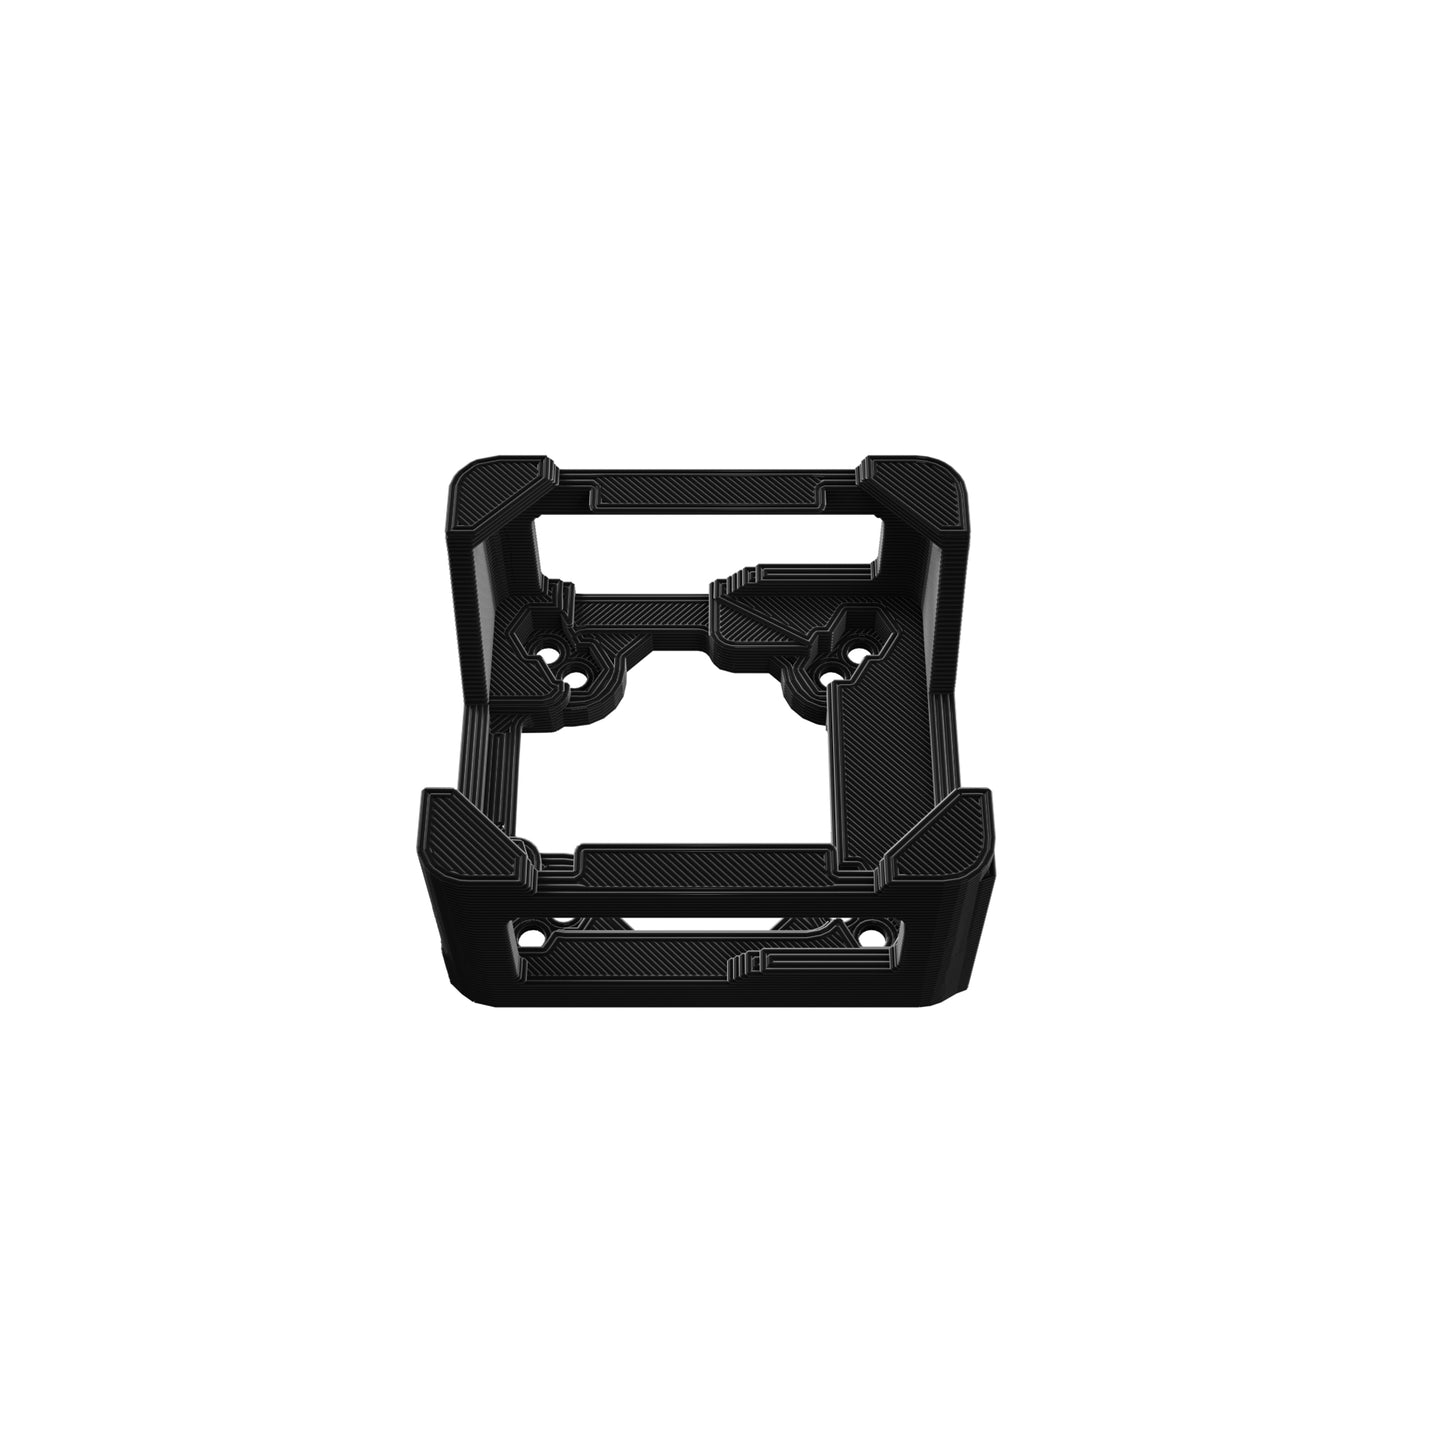 FPV DJI O3 20x20 and 25.5x25.5 Mounting Adapter Case 3D Printed TPU Black